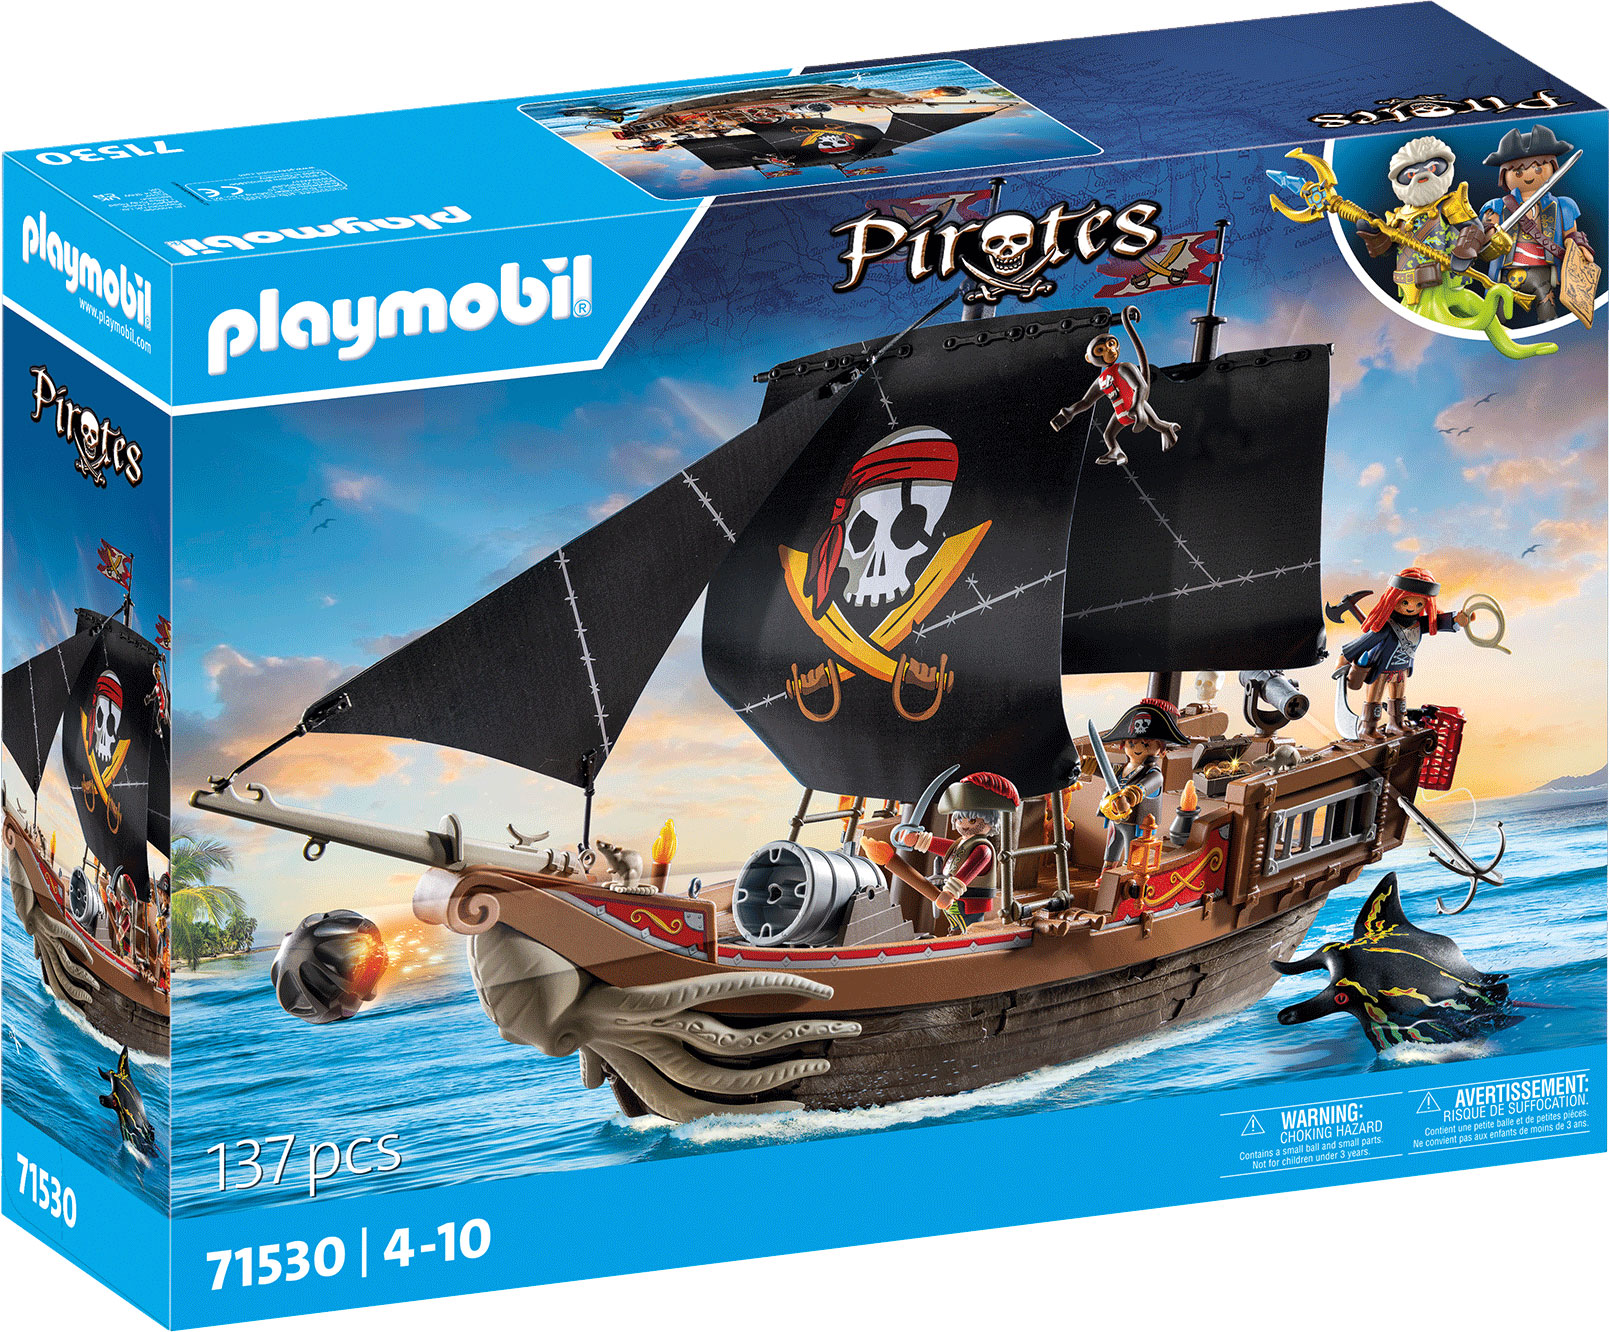 Playmobil Pirates 71530 pas cher, Bateau pirates